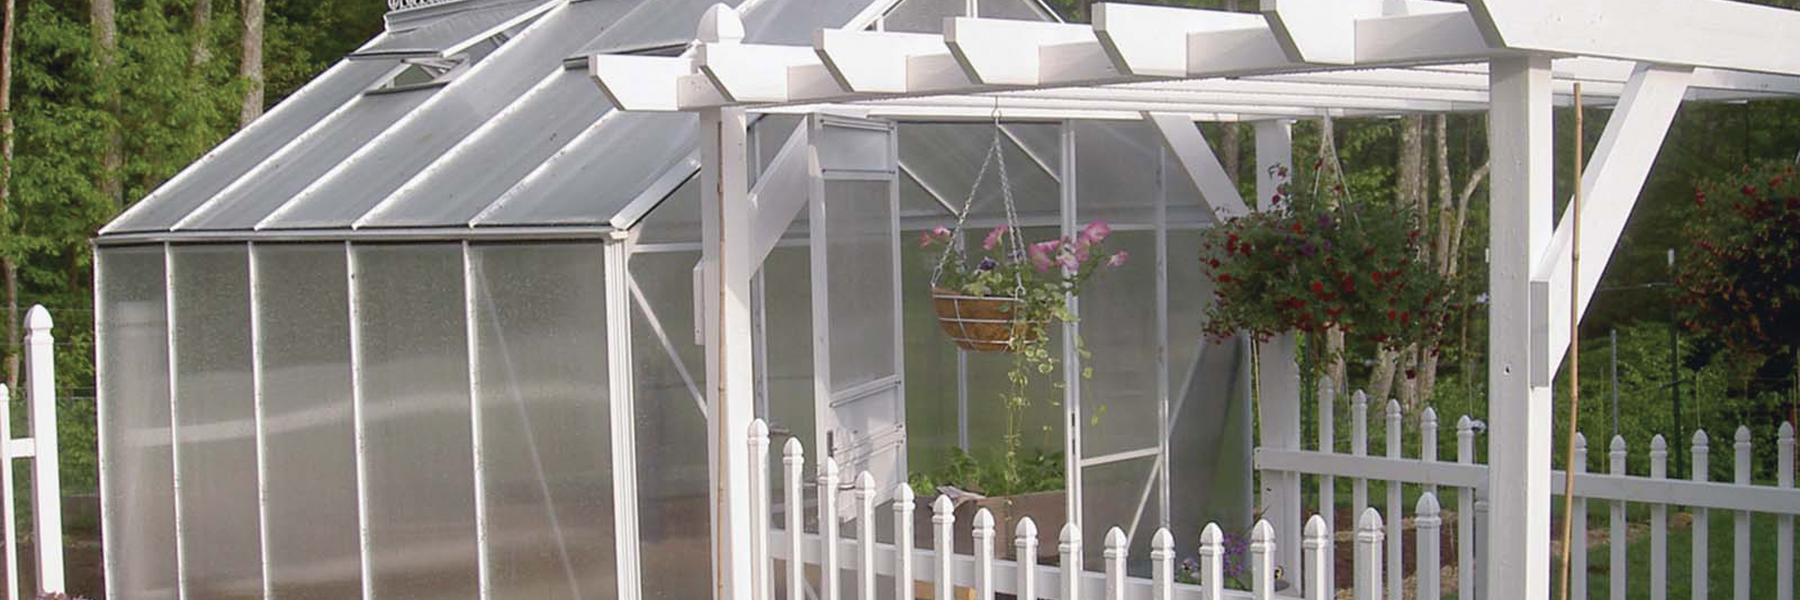 urban greenhouse